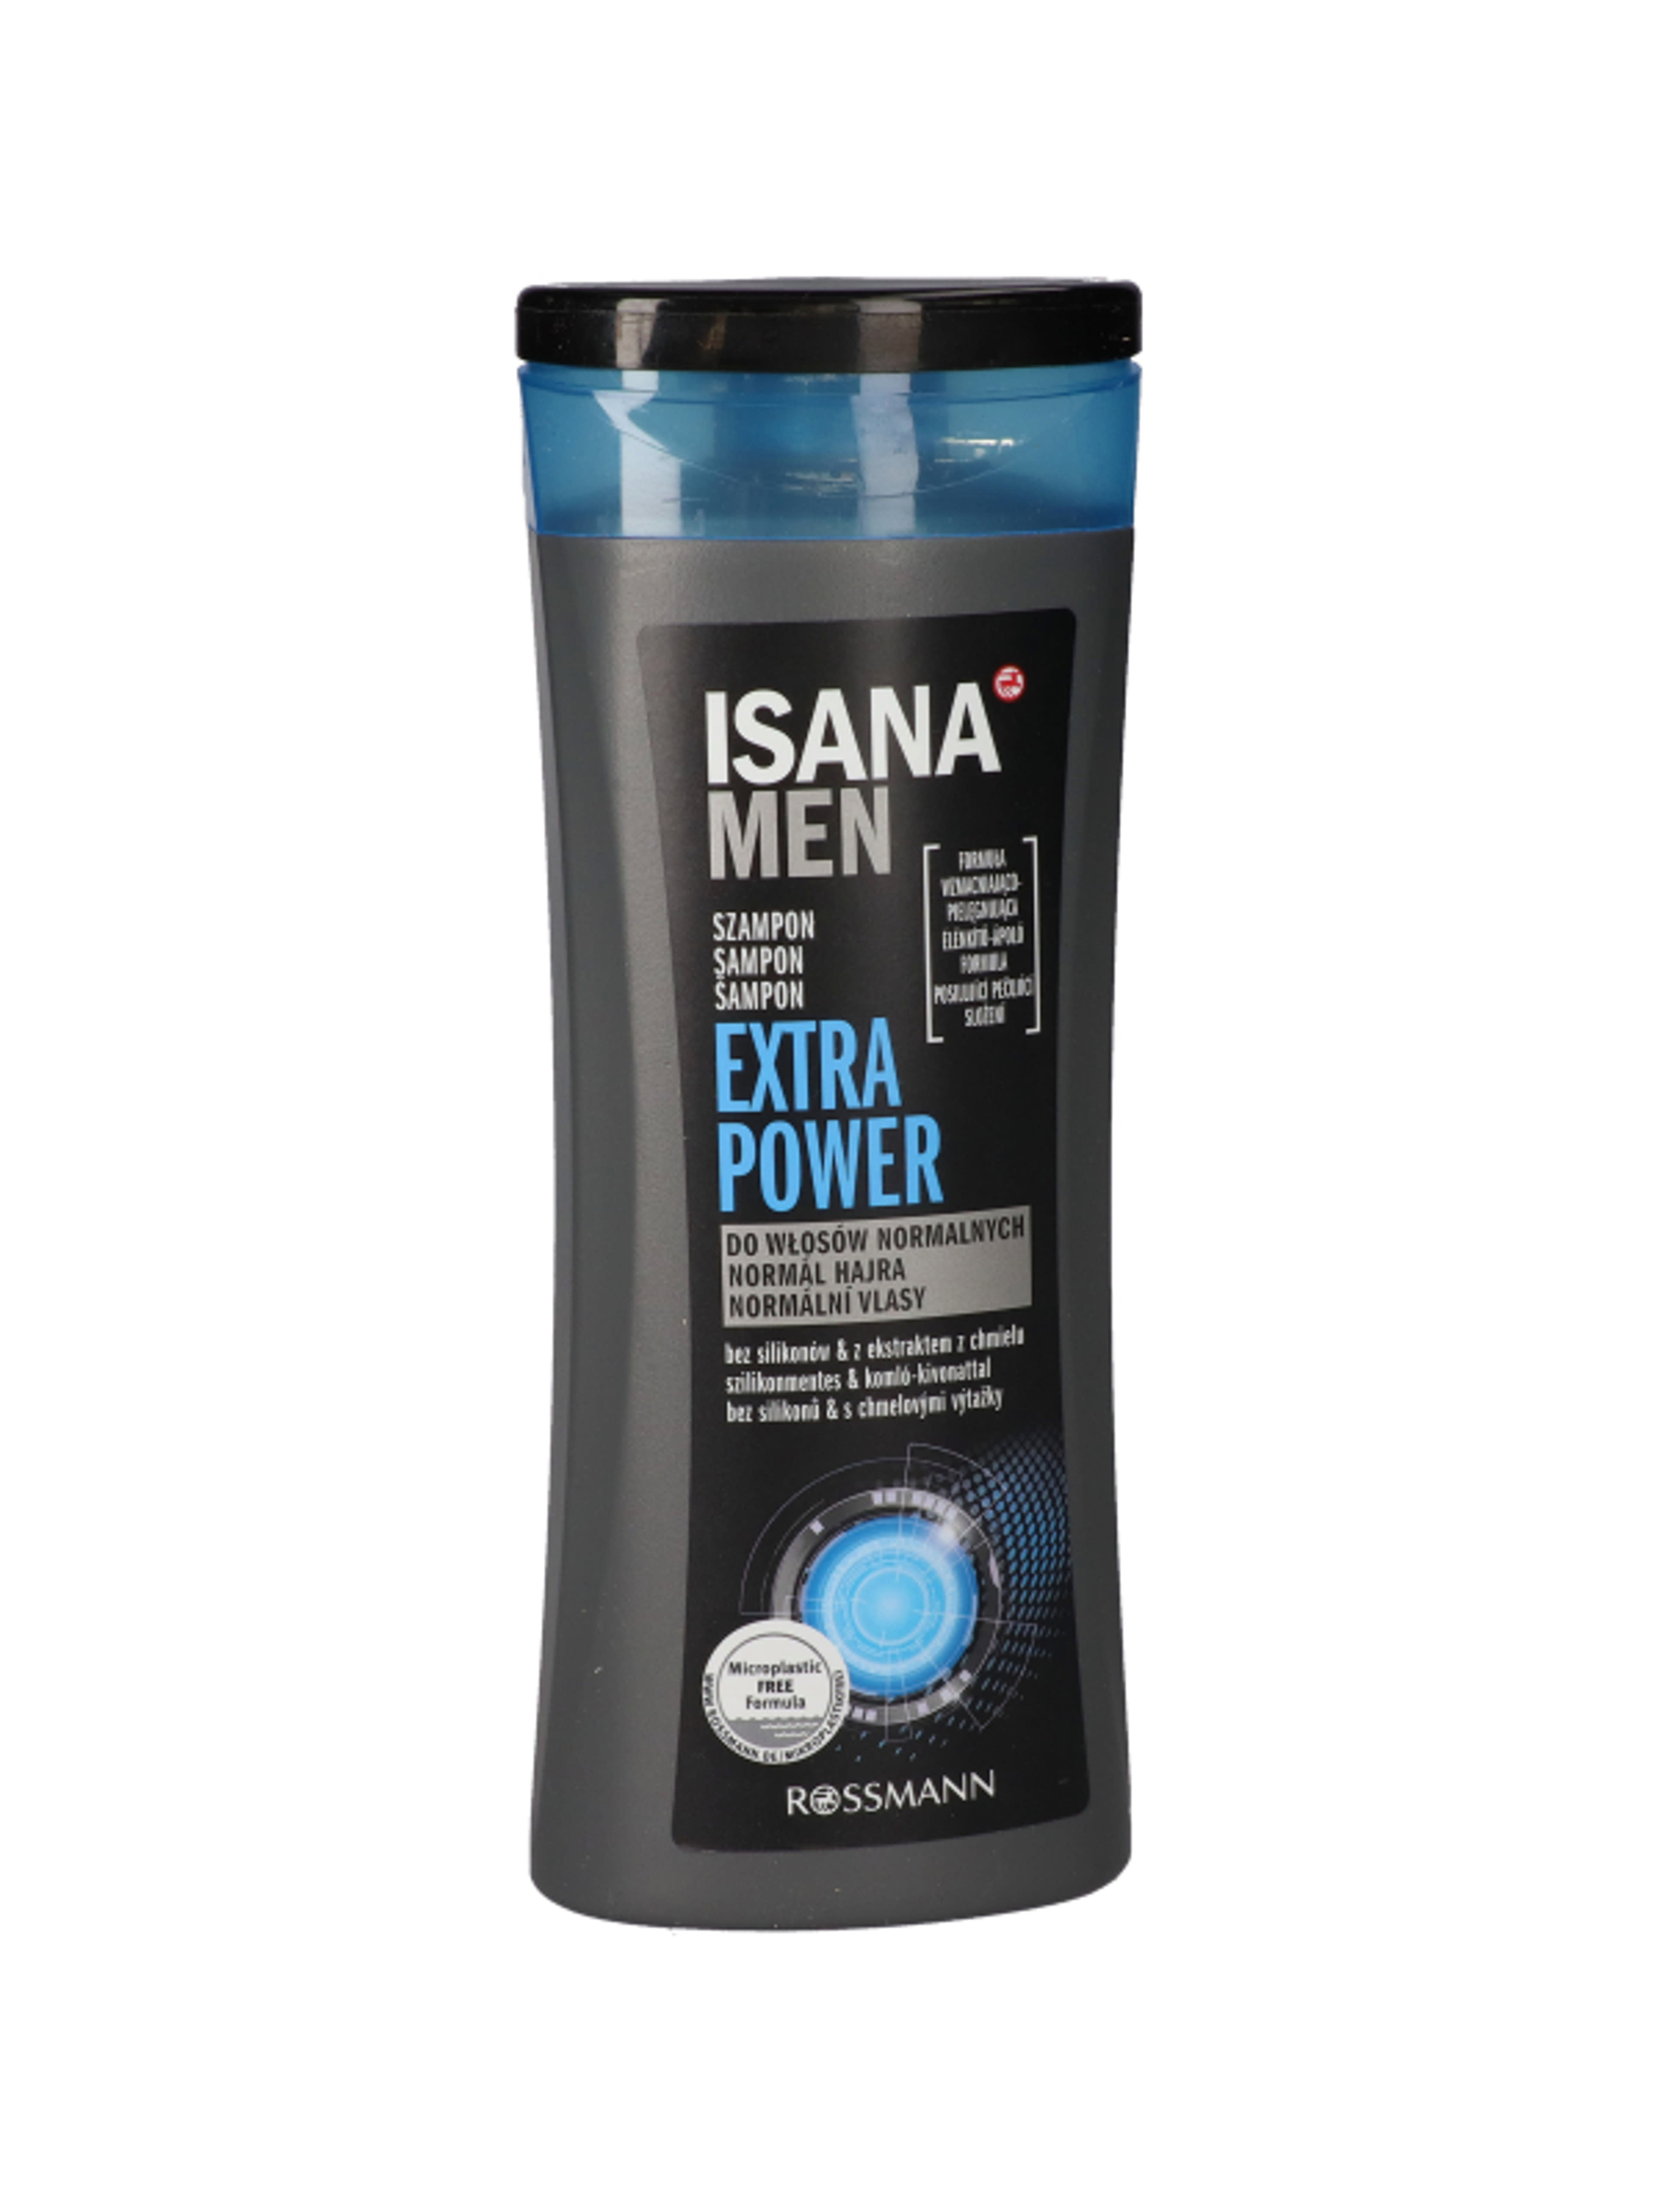 Isana Men Fresh Power sampon - 300 ml-2